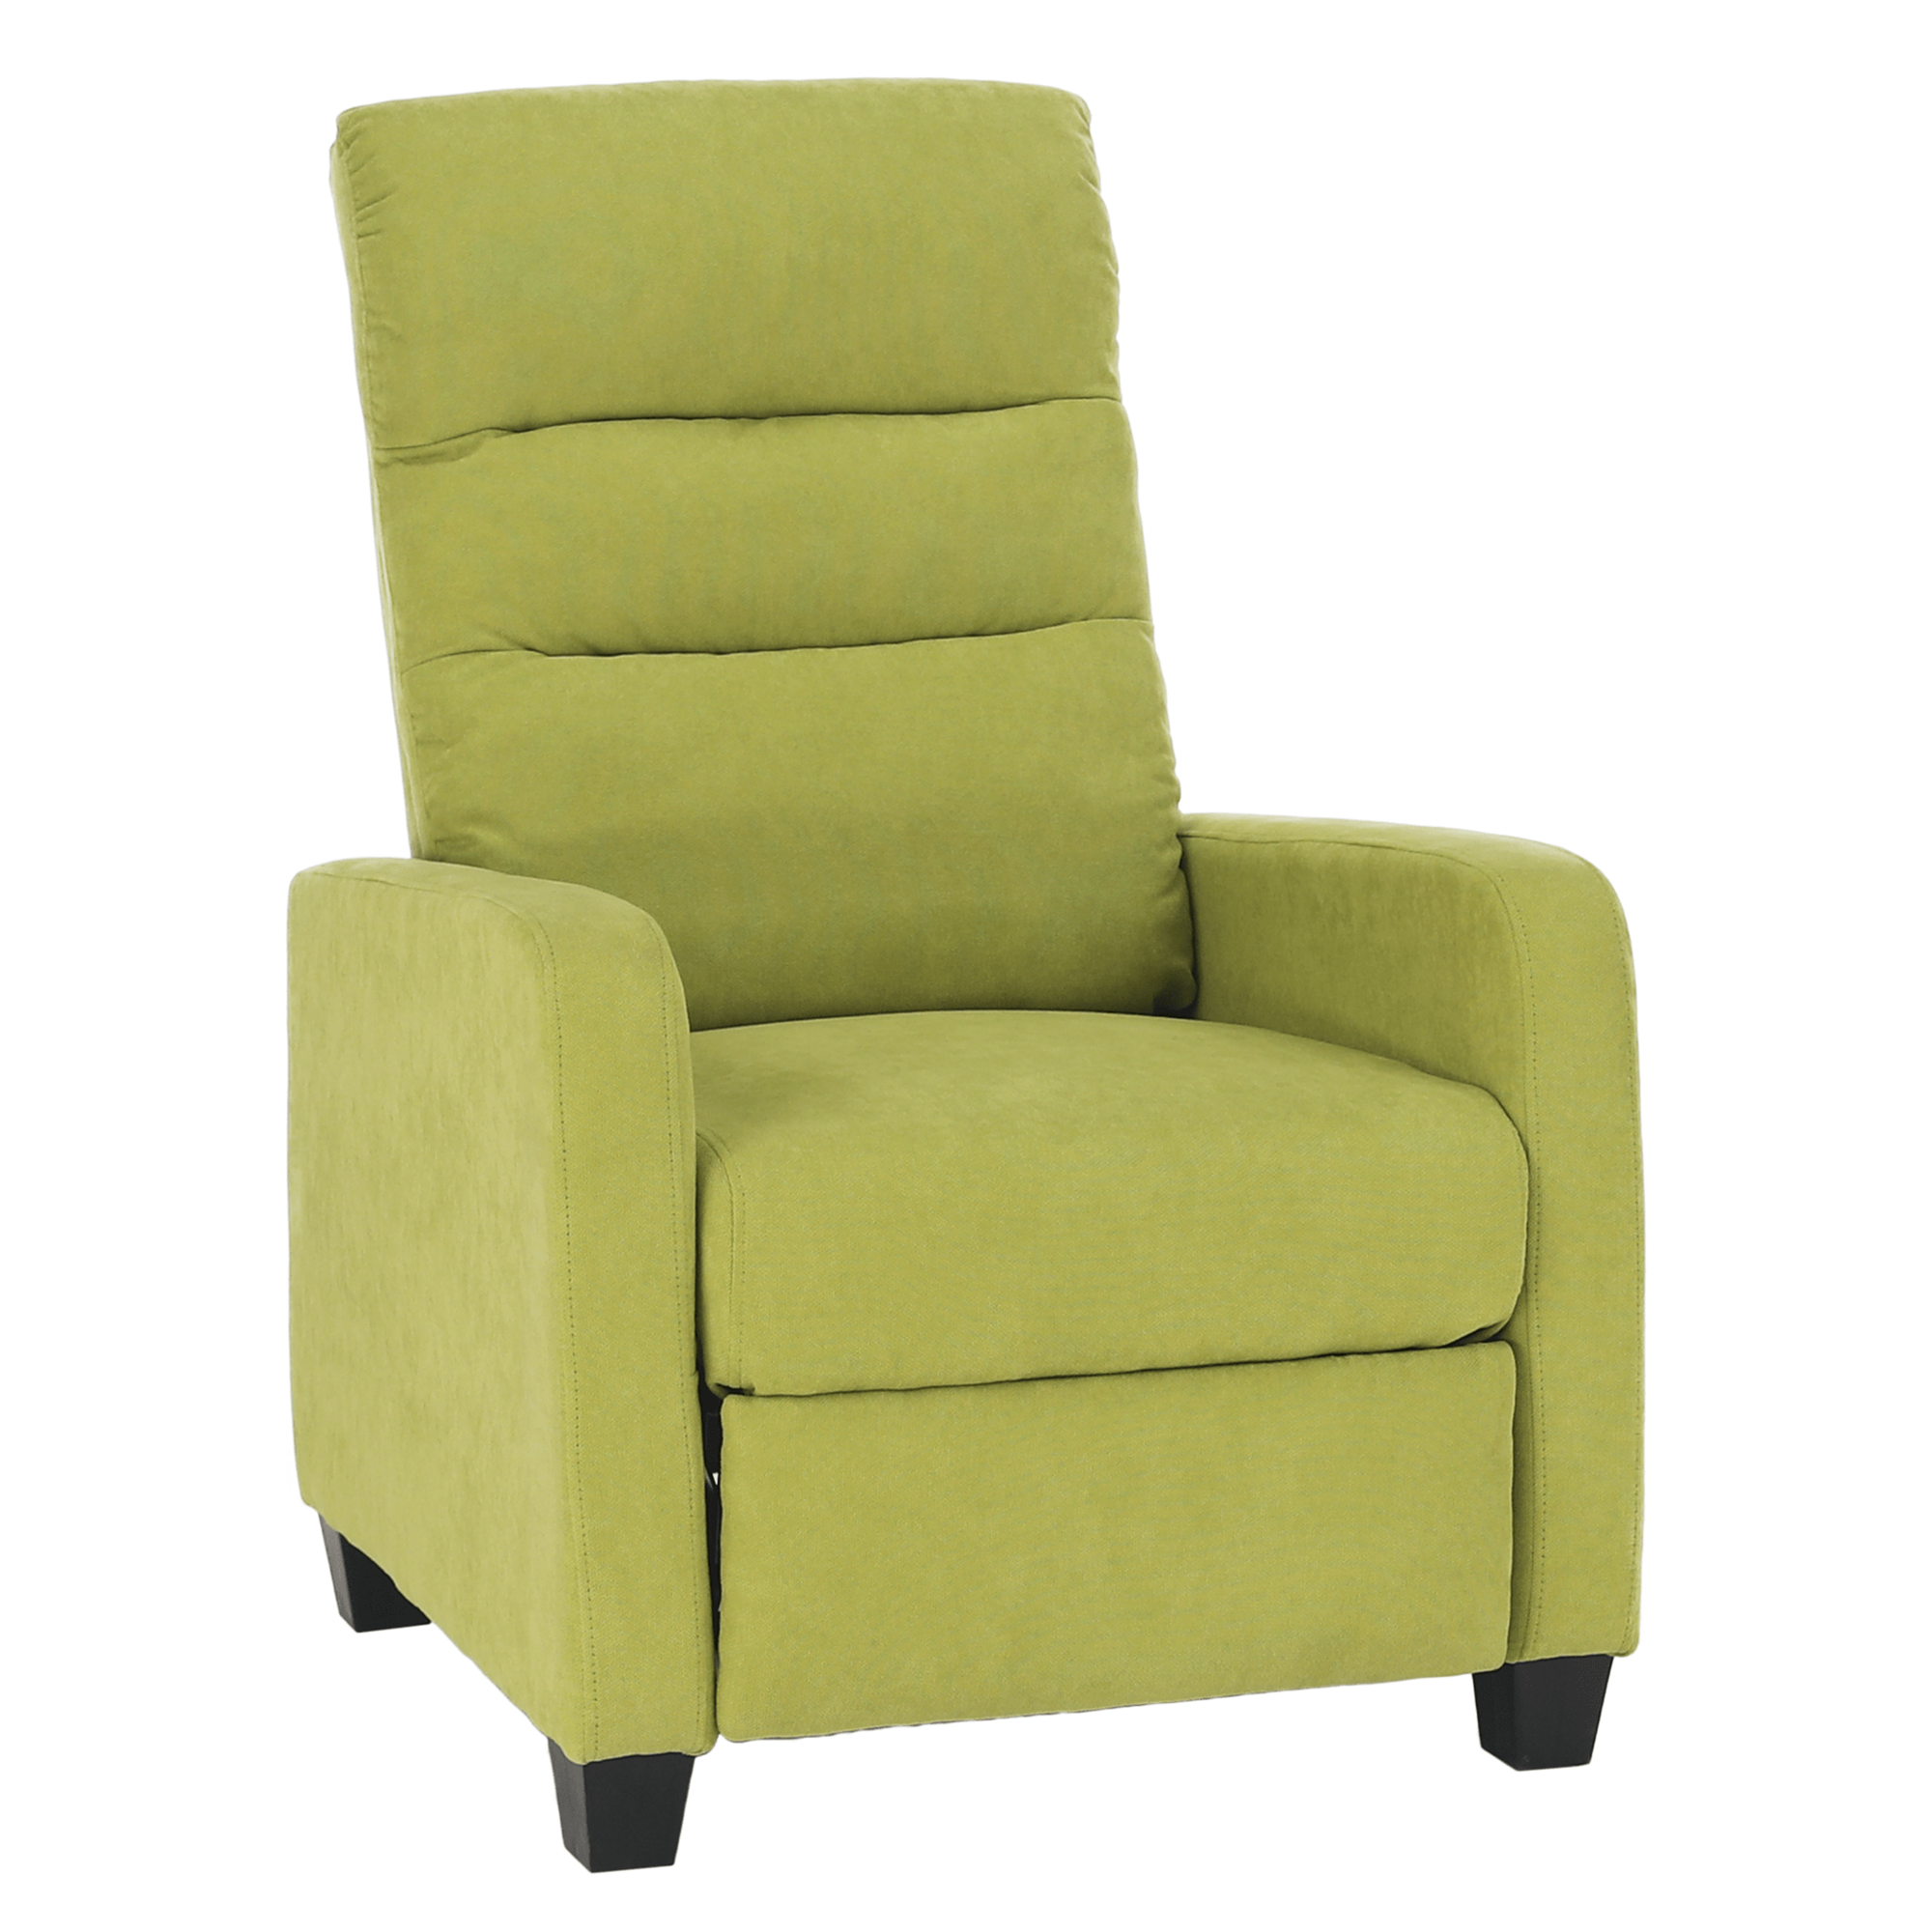 Relaxáló fotel, zöld, TURNER (TK)